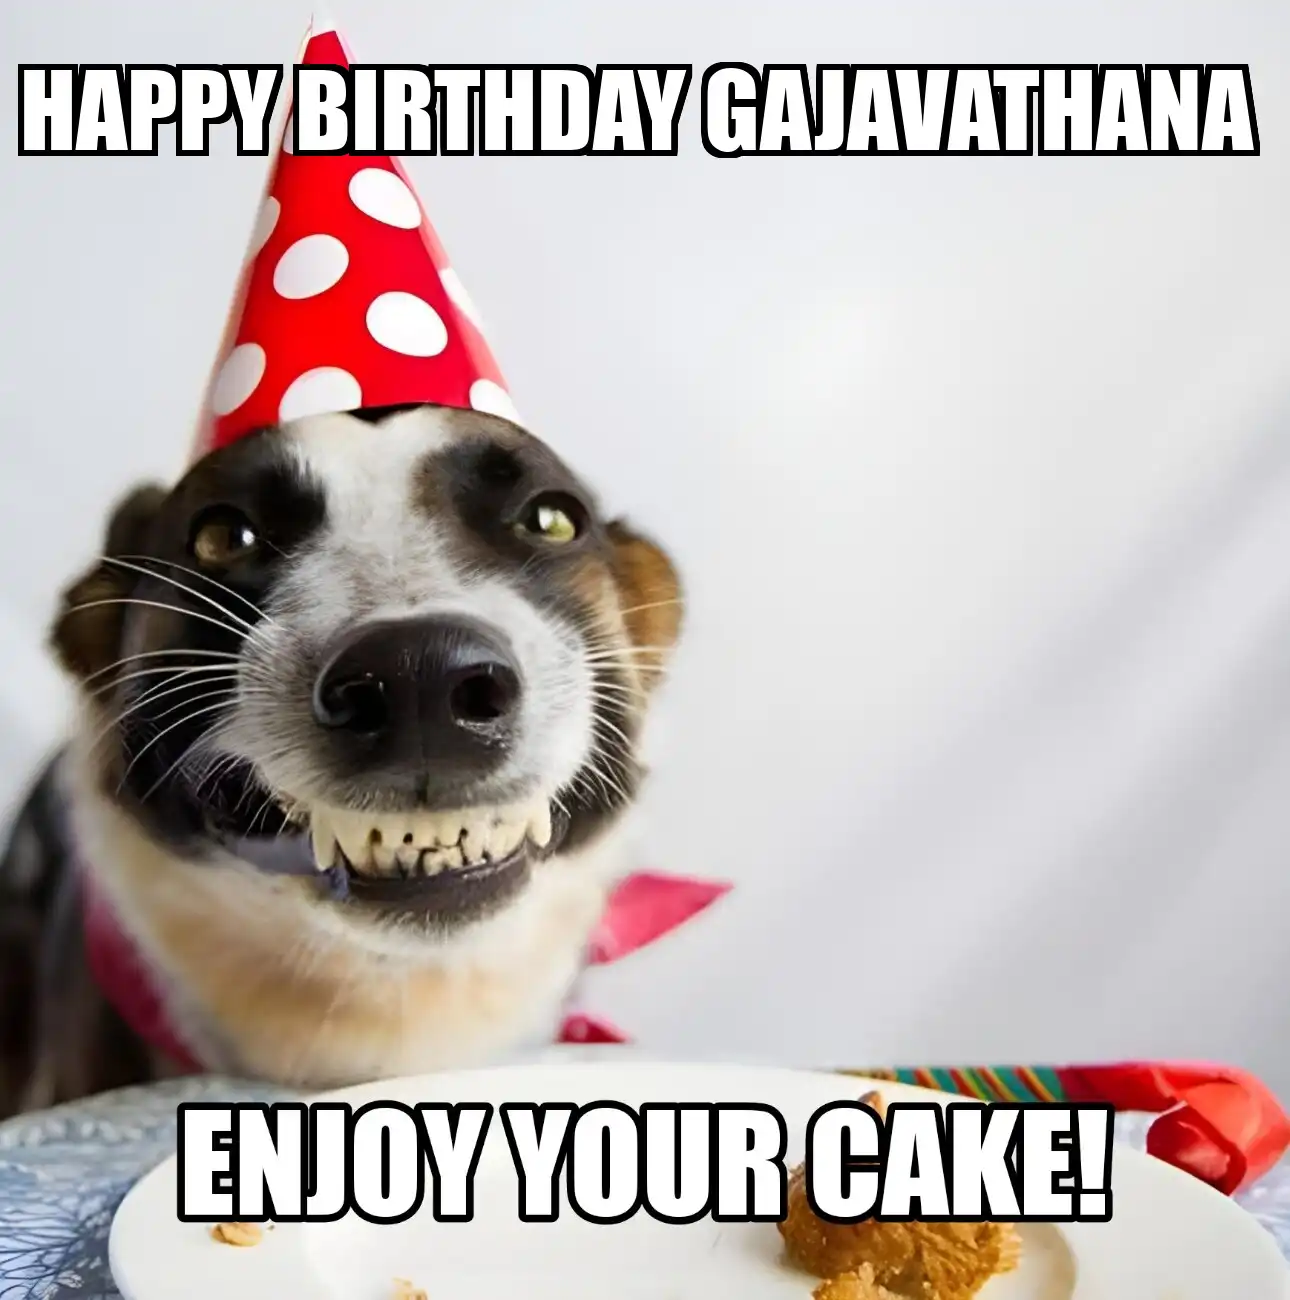 Happy Birthday Gajavathana Enjoy Your Cake Dog Meme